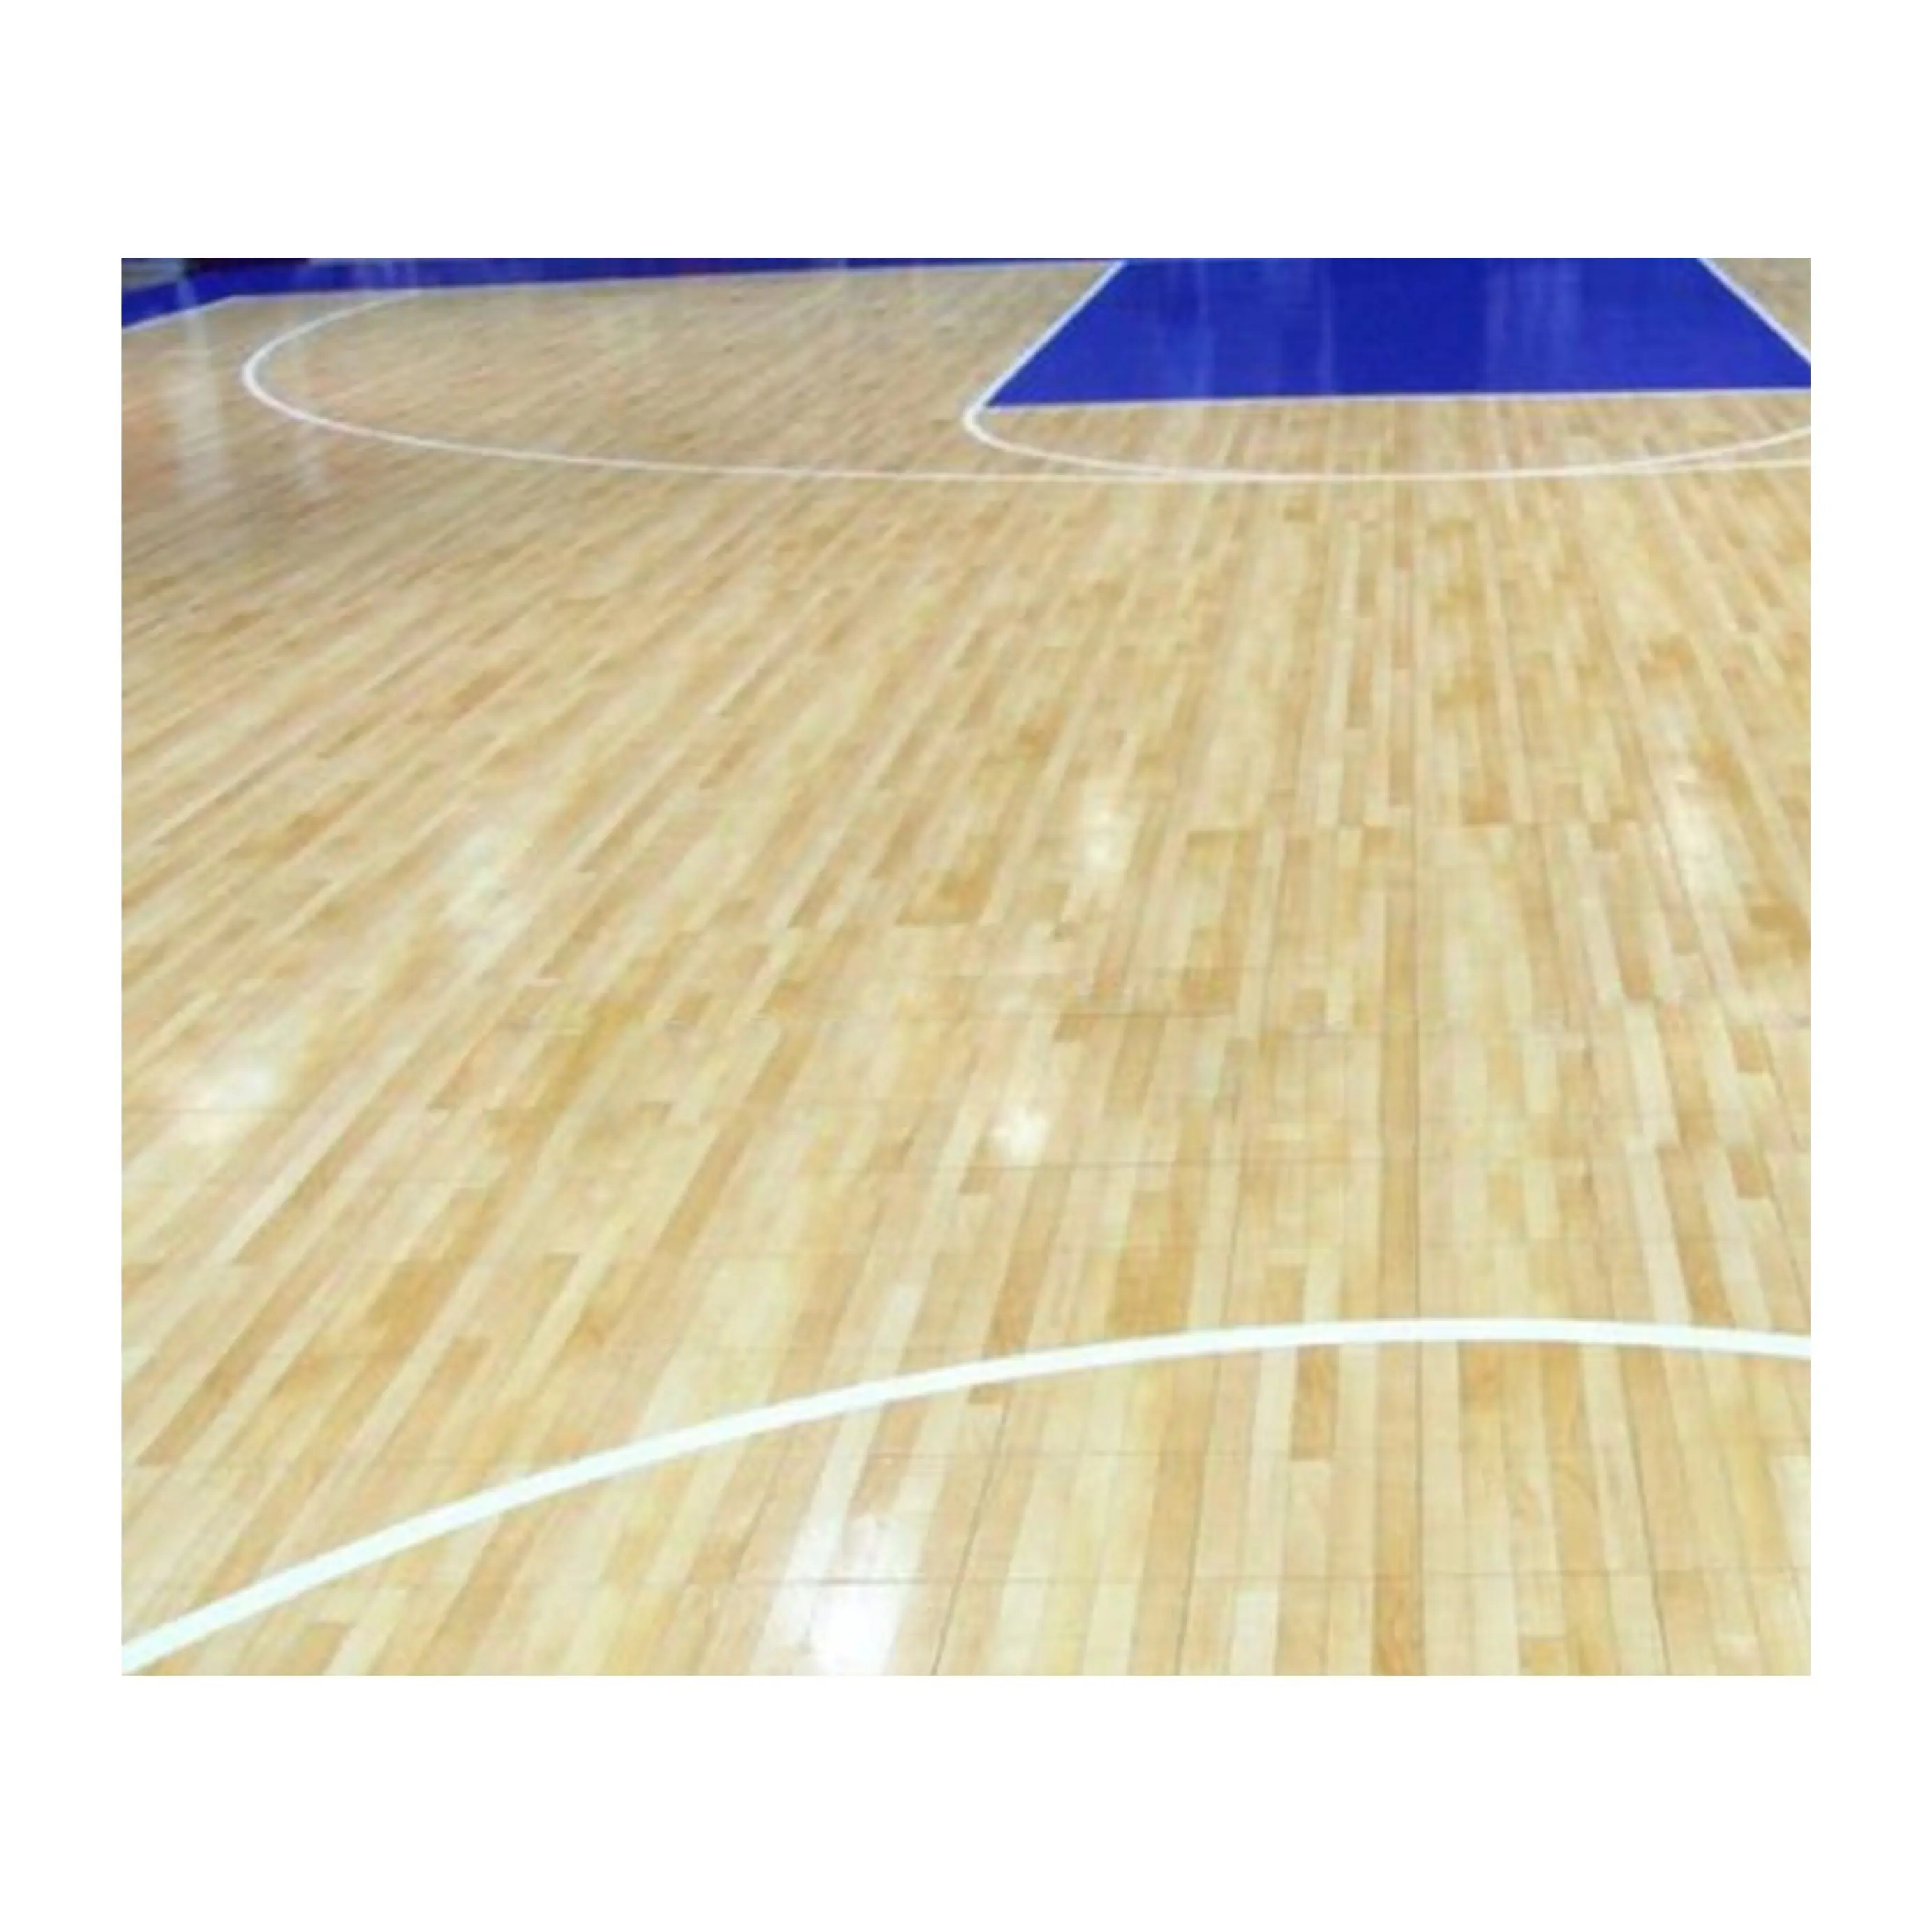 Speciale legno duro d'acero resistente all'usura sport acero legno duro campi da basket Indoor Athletic Flooring ABCD Grade superiore a 20mm